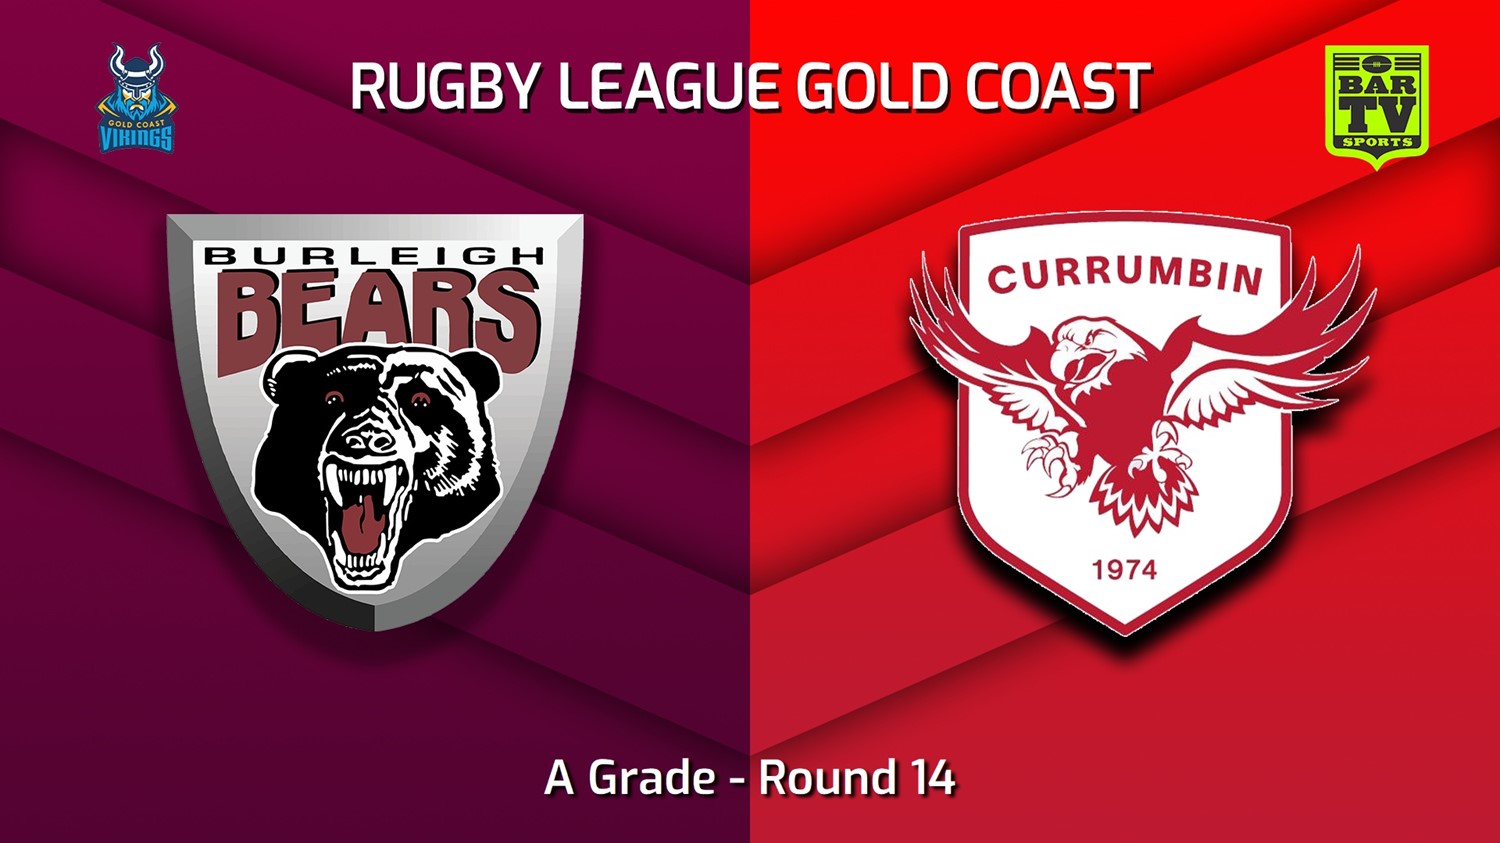 230806-Gold Coast Round 14 - A Grade - Burleigh Bears v Currumbin Eagles Minigame Slate Image